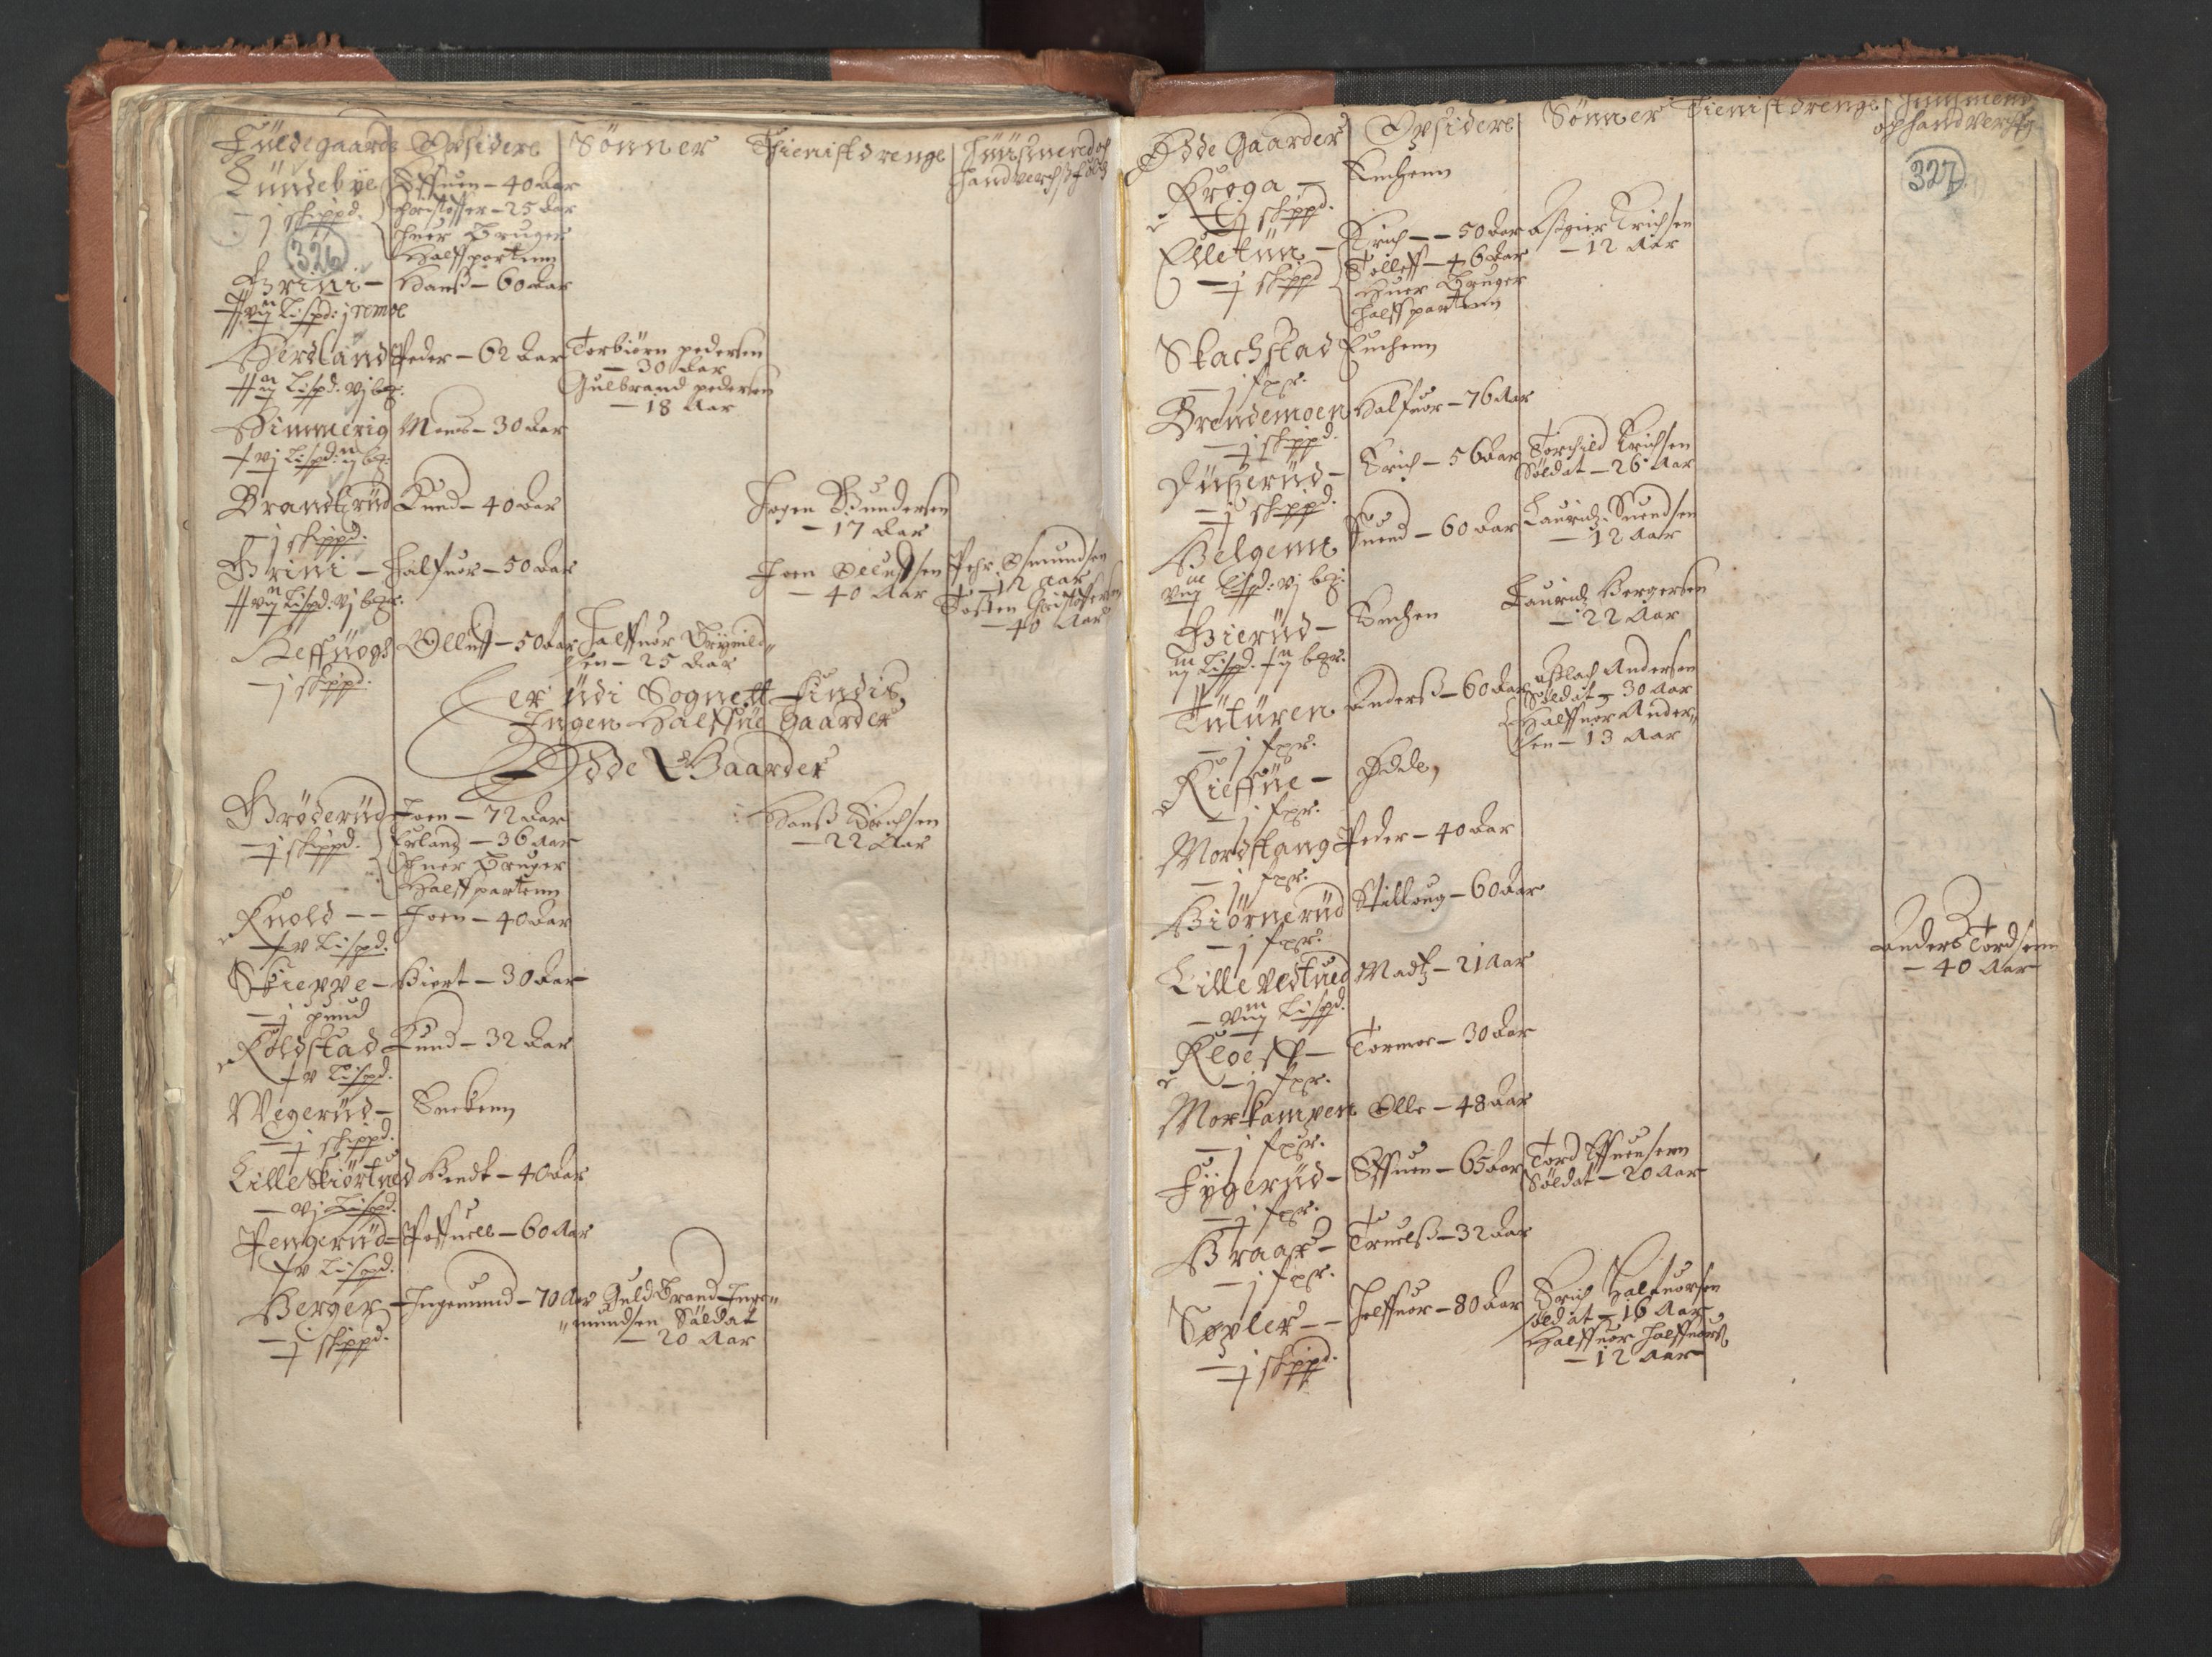 RA, Fogdenes og sorenskrivernes manntall 1664-1666, nr. 1: Fogderier (len og skipreider) i nåværende Østfold fylke, 1664, s. 326-327